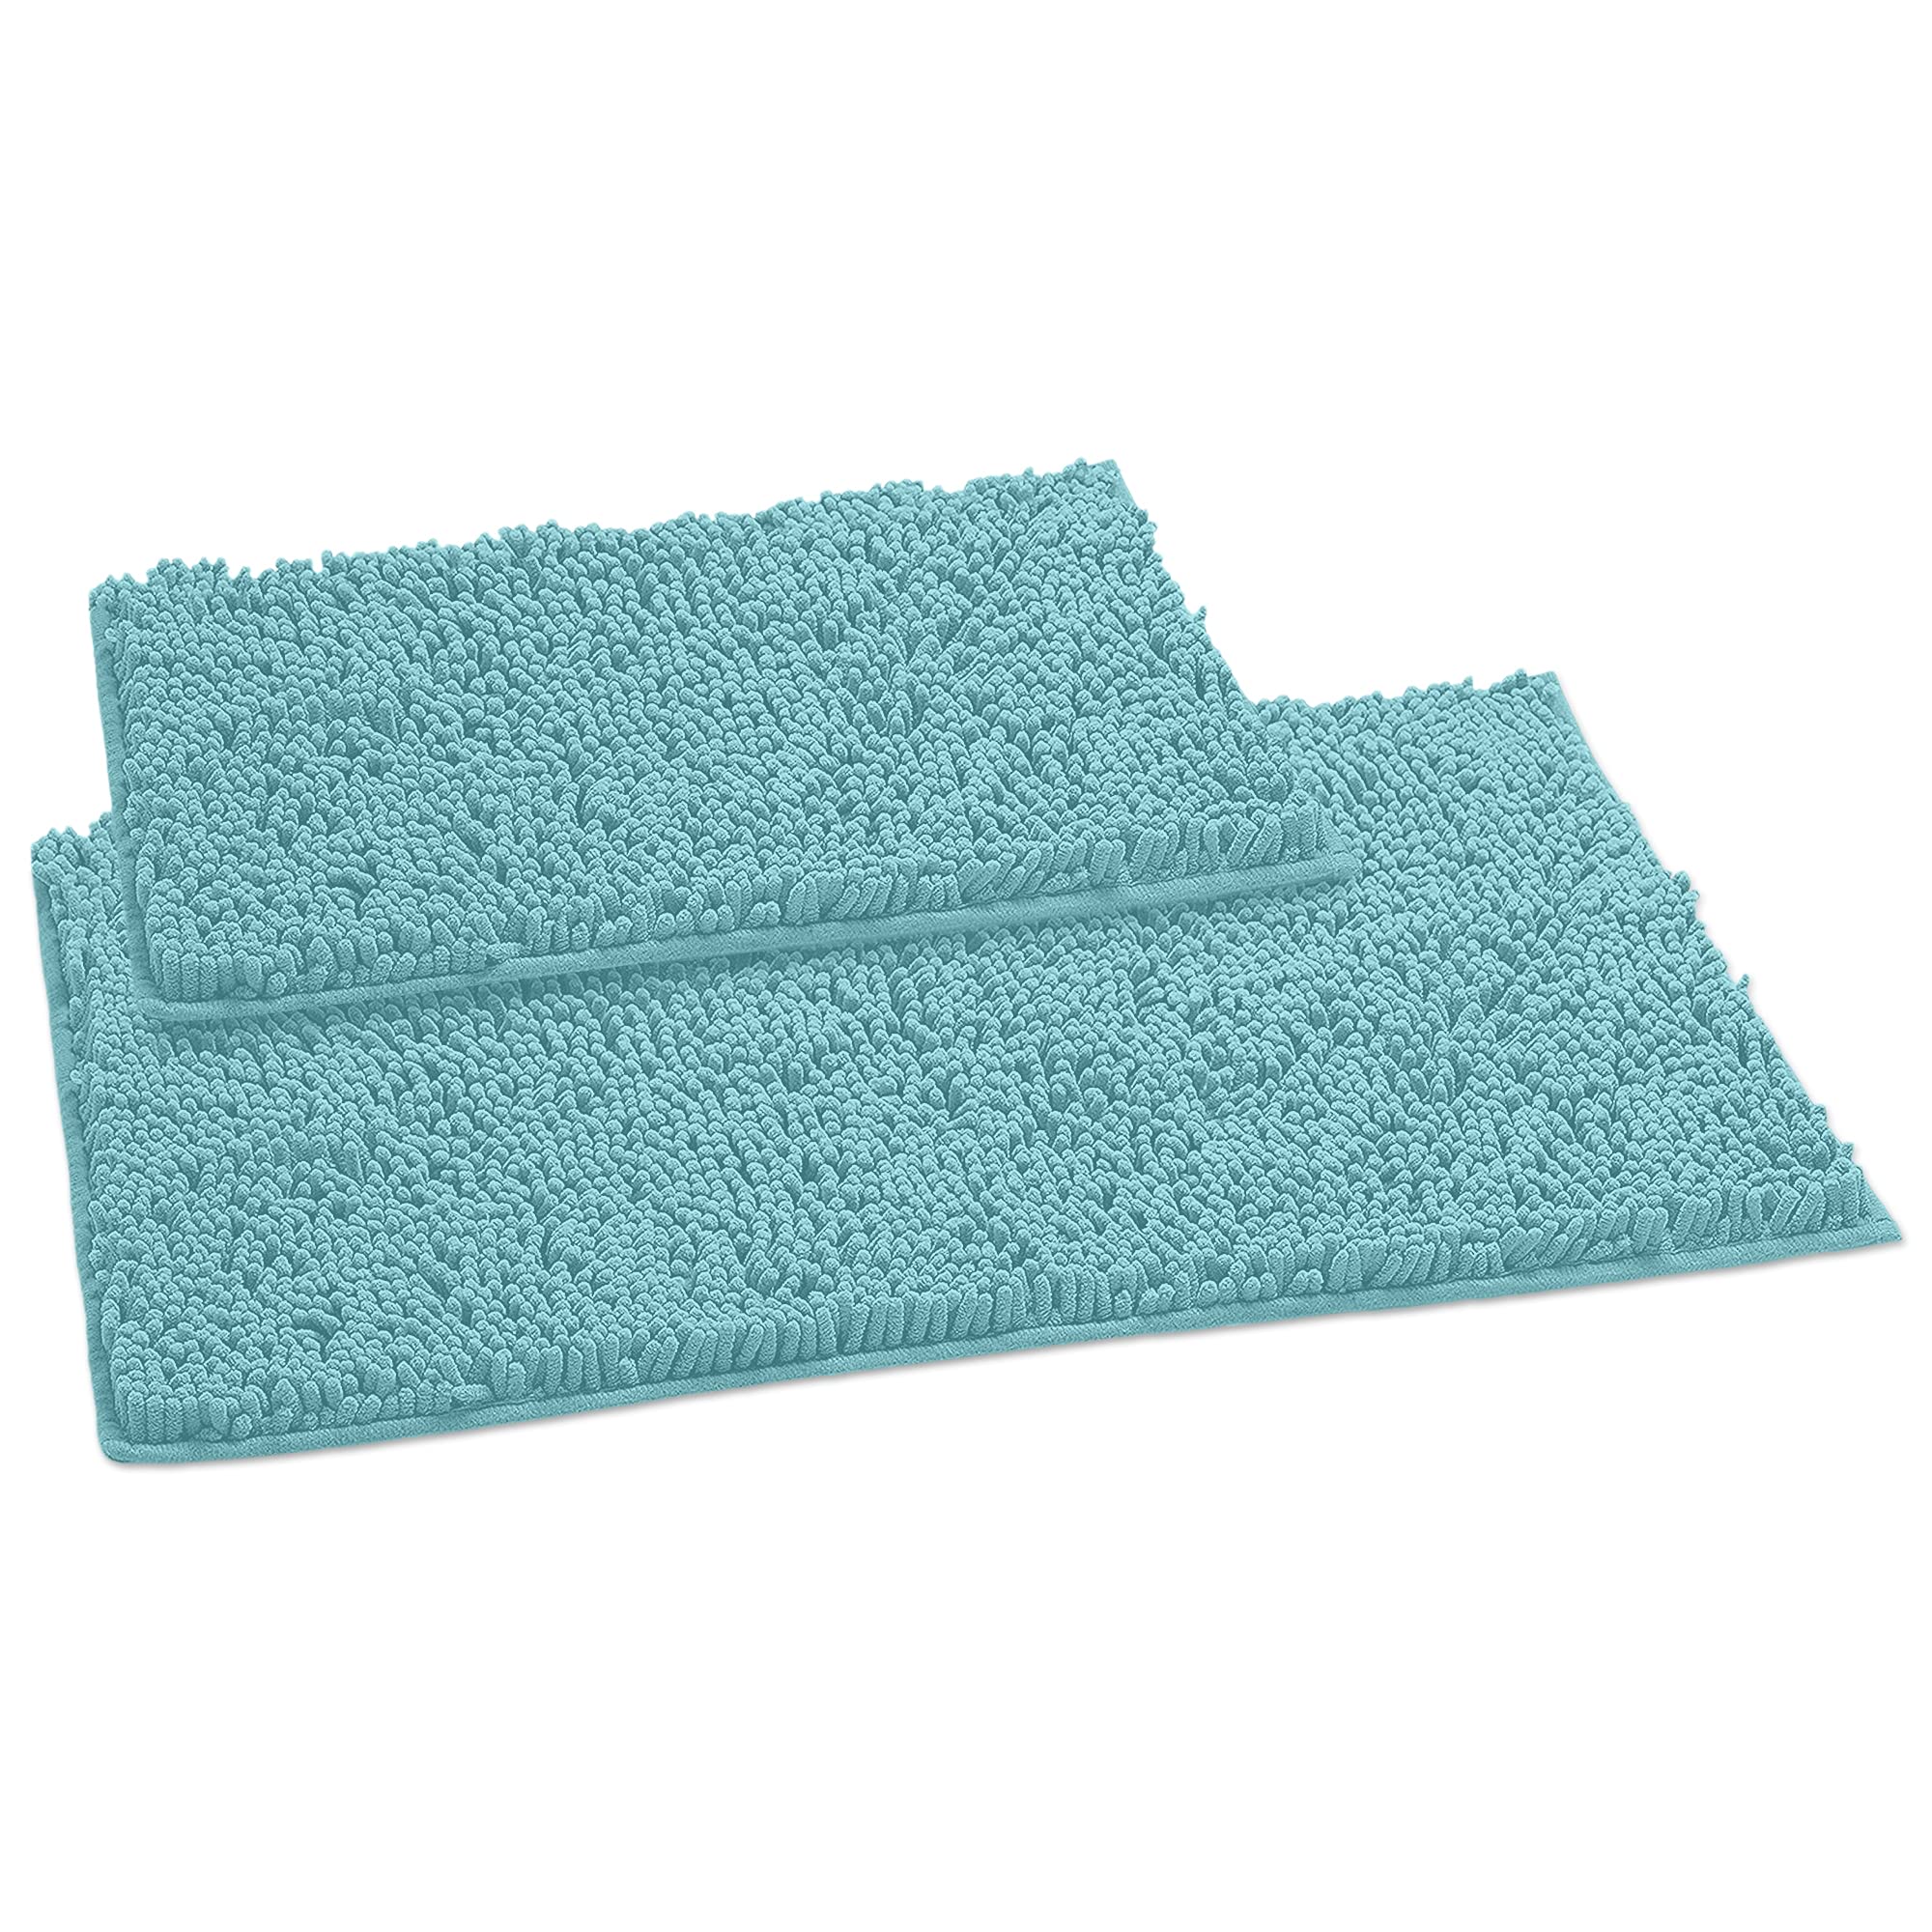 LuxUrux Bathroom Rug Set�Extra-Soft Plush Bath mat Shower Bathroom Rugs,1'' Chenille Microfiber Material, Super Absorbent (30 X 20'' + 23 x 15'', Spa Blue)  - Very Good